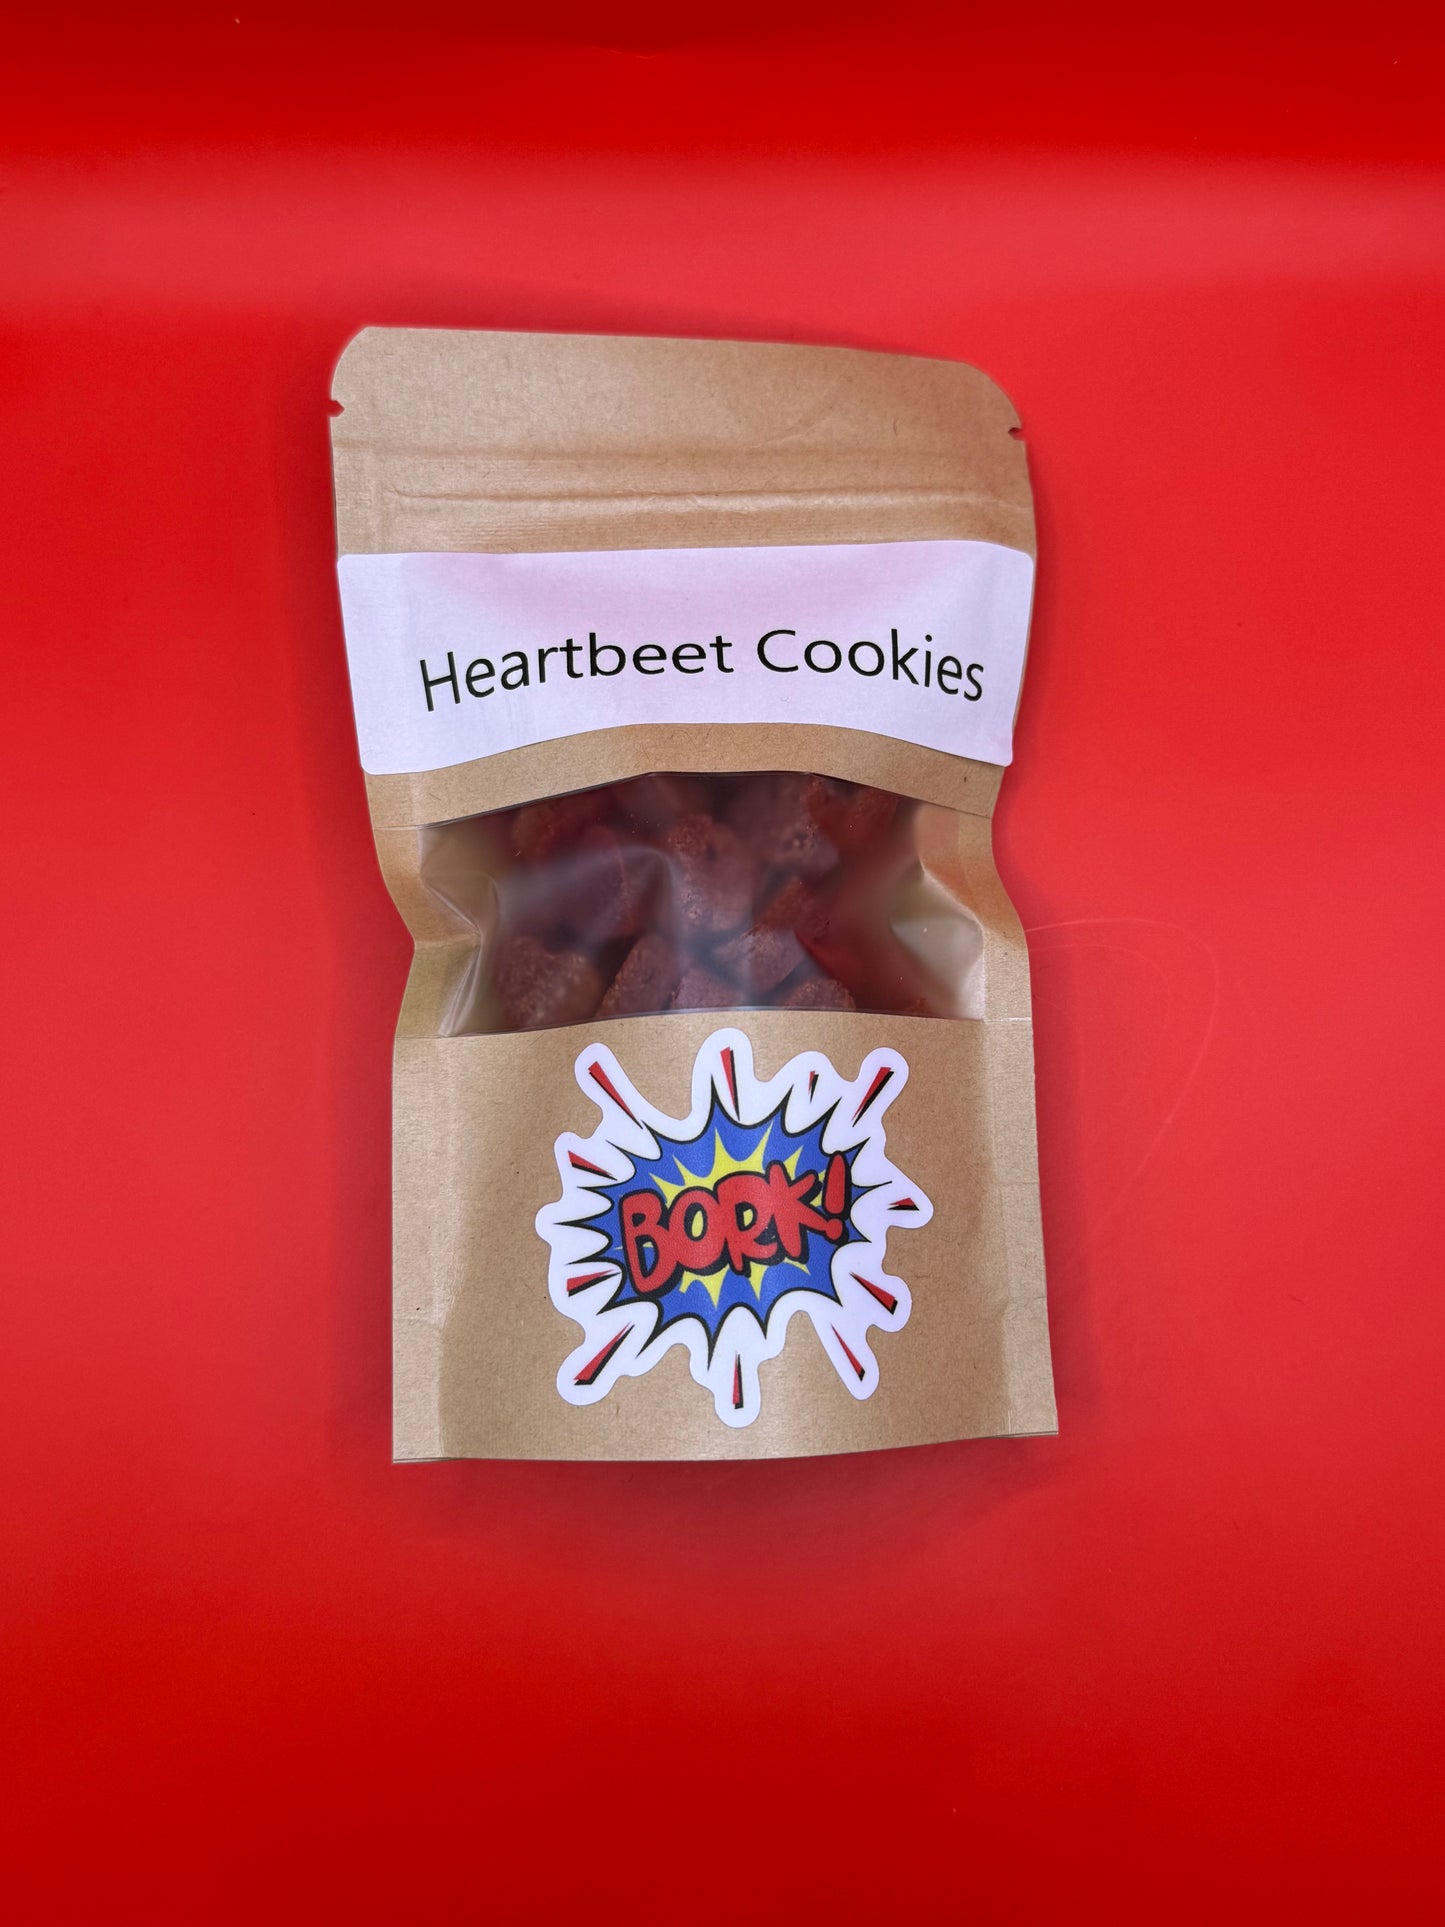 Bork "Heartbeet" Cookies